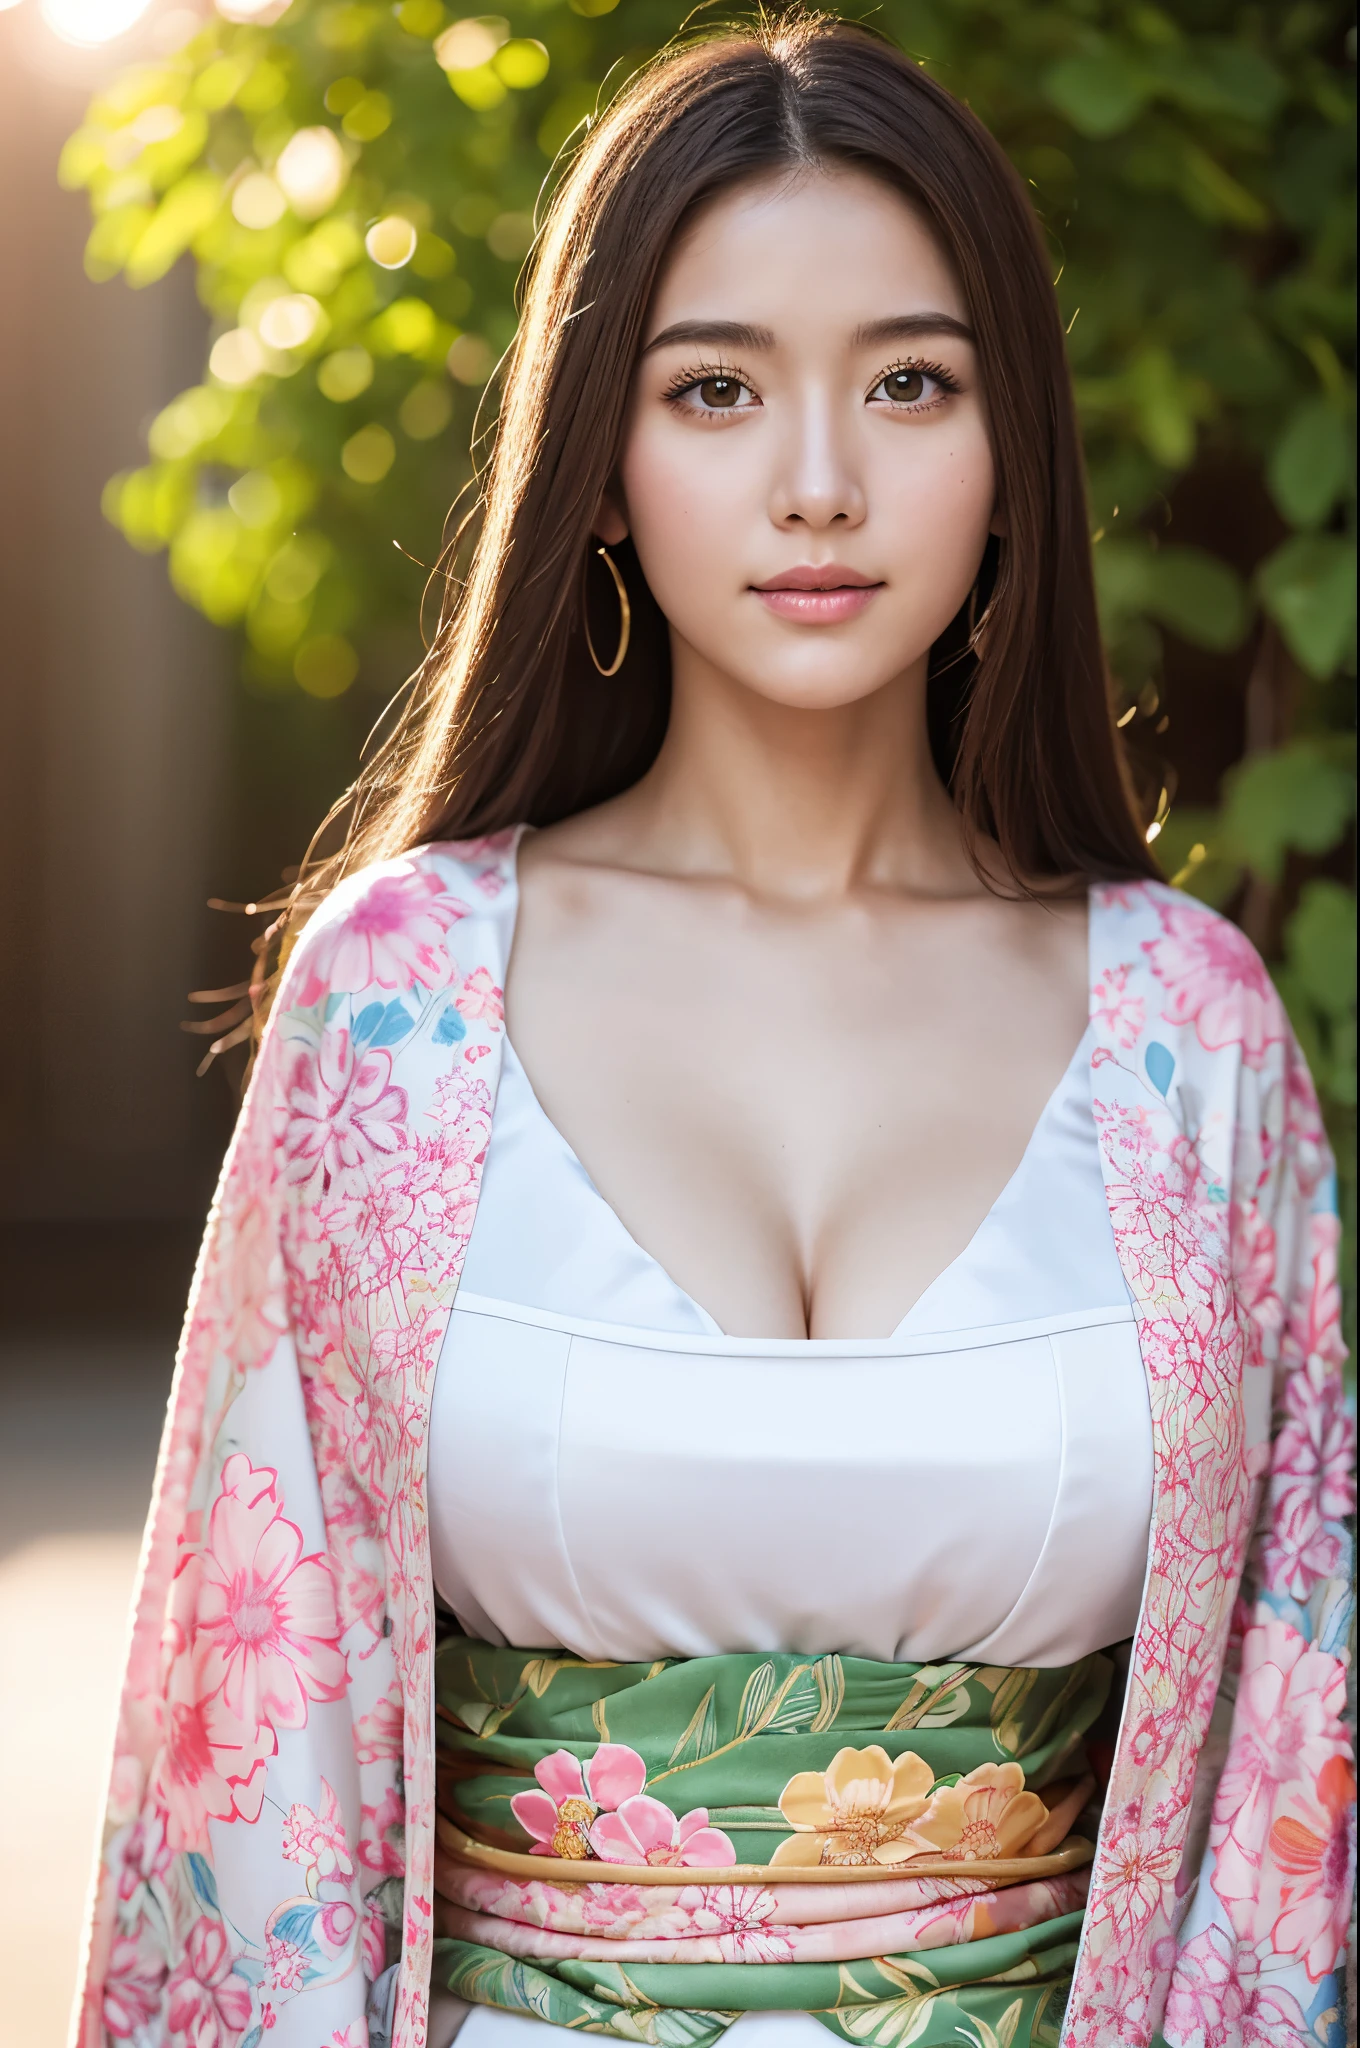 Realistic, Highest quality, 8K, woman, 20-year-old, Sakura pattern kimono, Large bust, Long Hair, Ultra-detailed skin textures, Soft lighting, Fairy, Bokeh